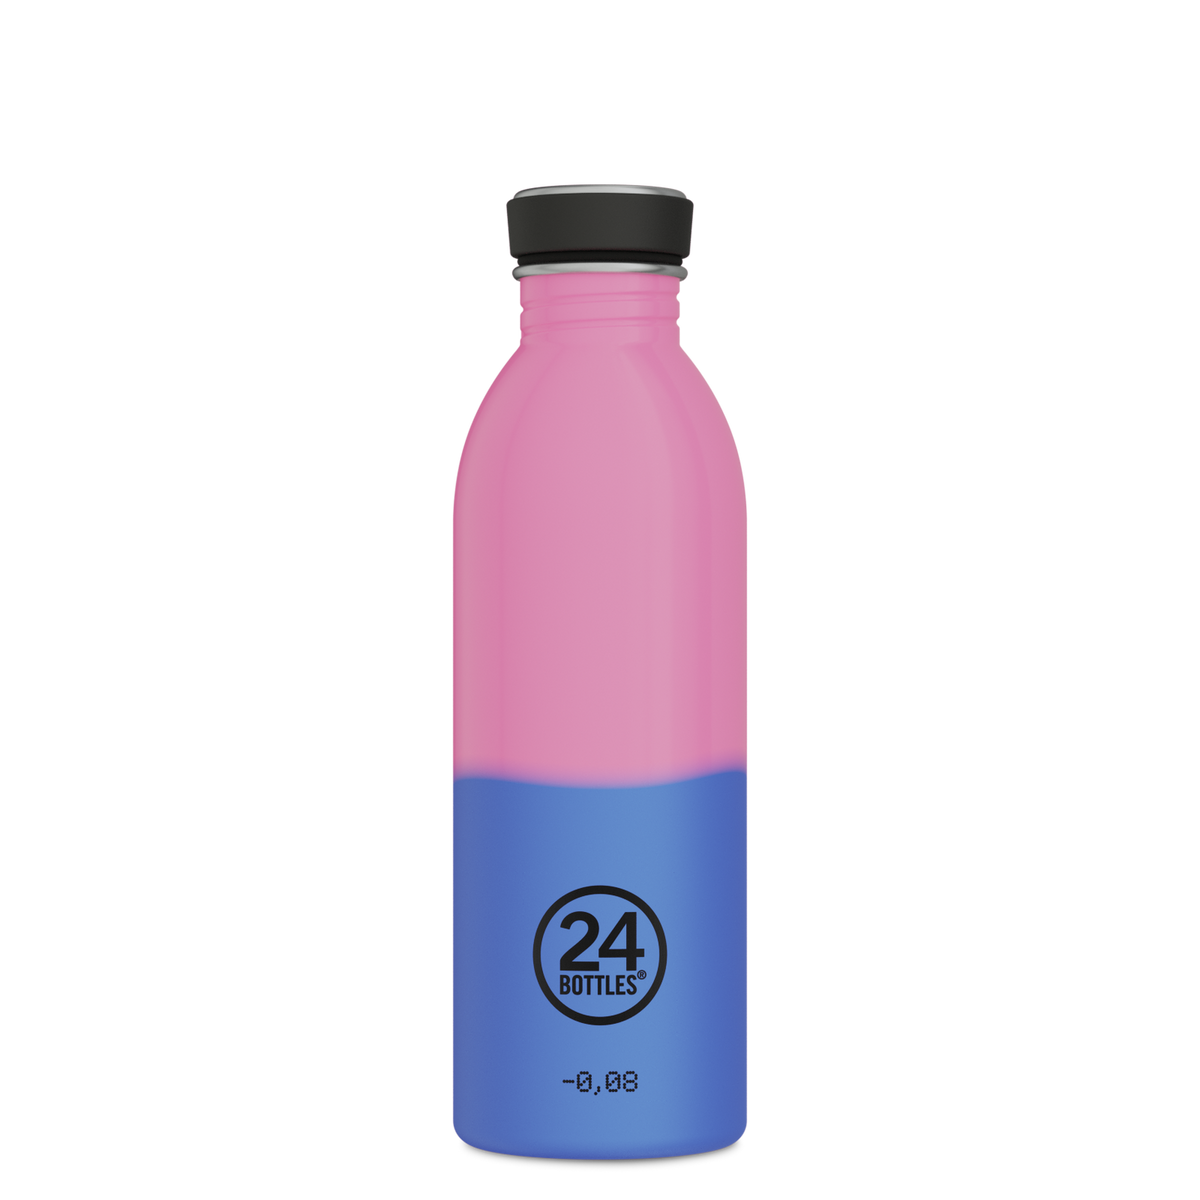 Trinkflasche REactive | div. Farben | 500ml l 24bottles